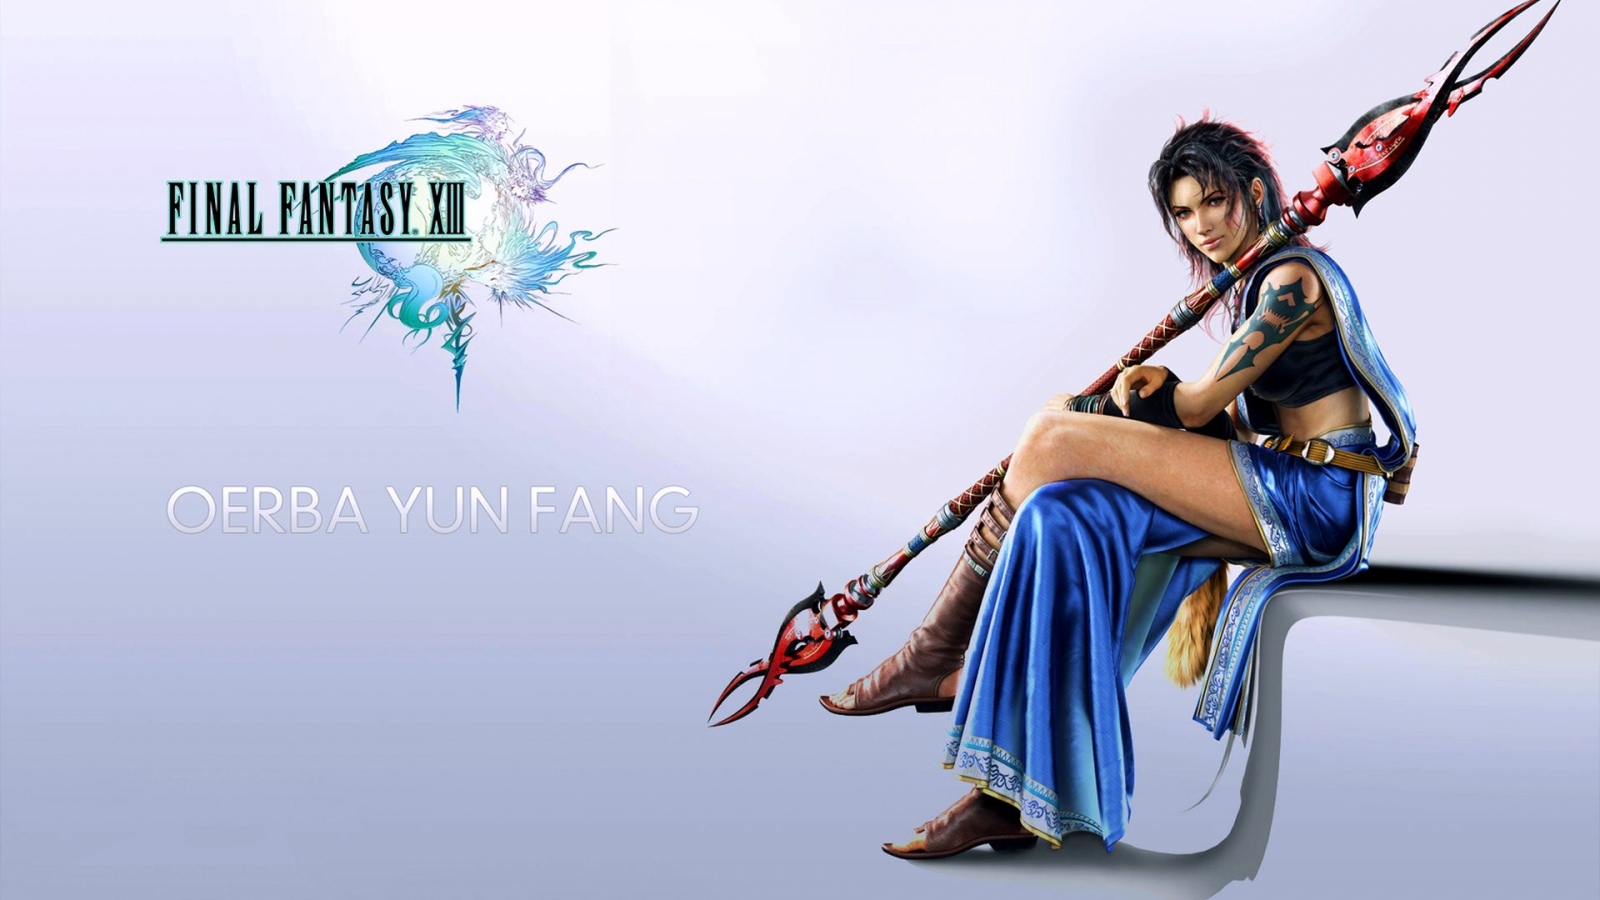 Final Fantasy XIII Oerba Yun Fang for 1600 x 900 HDTV resolution